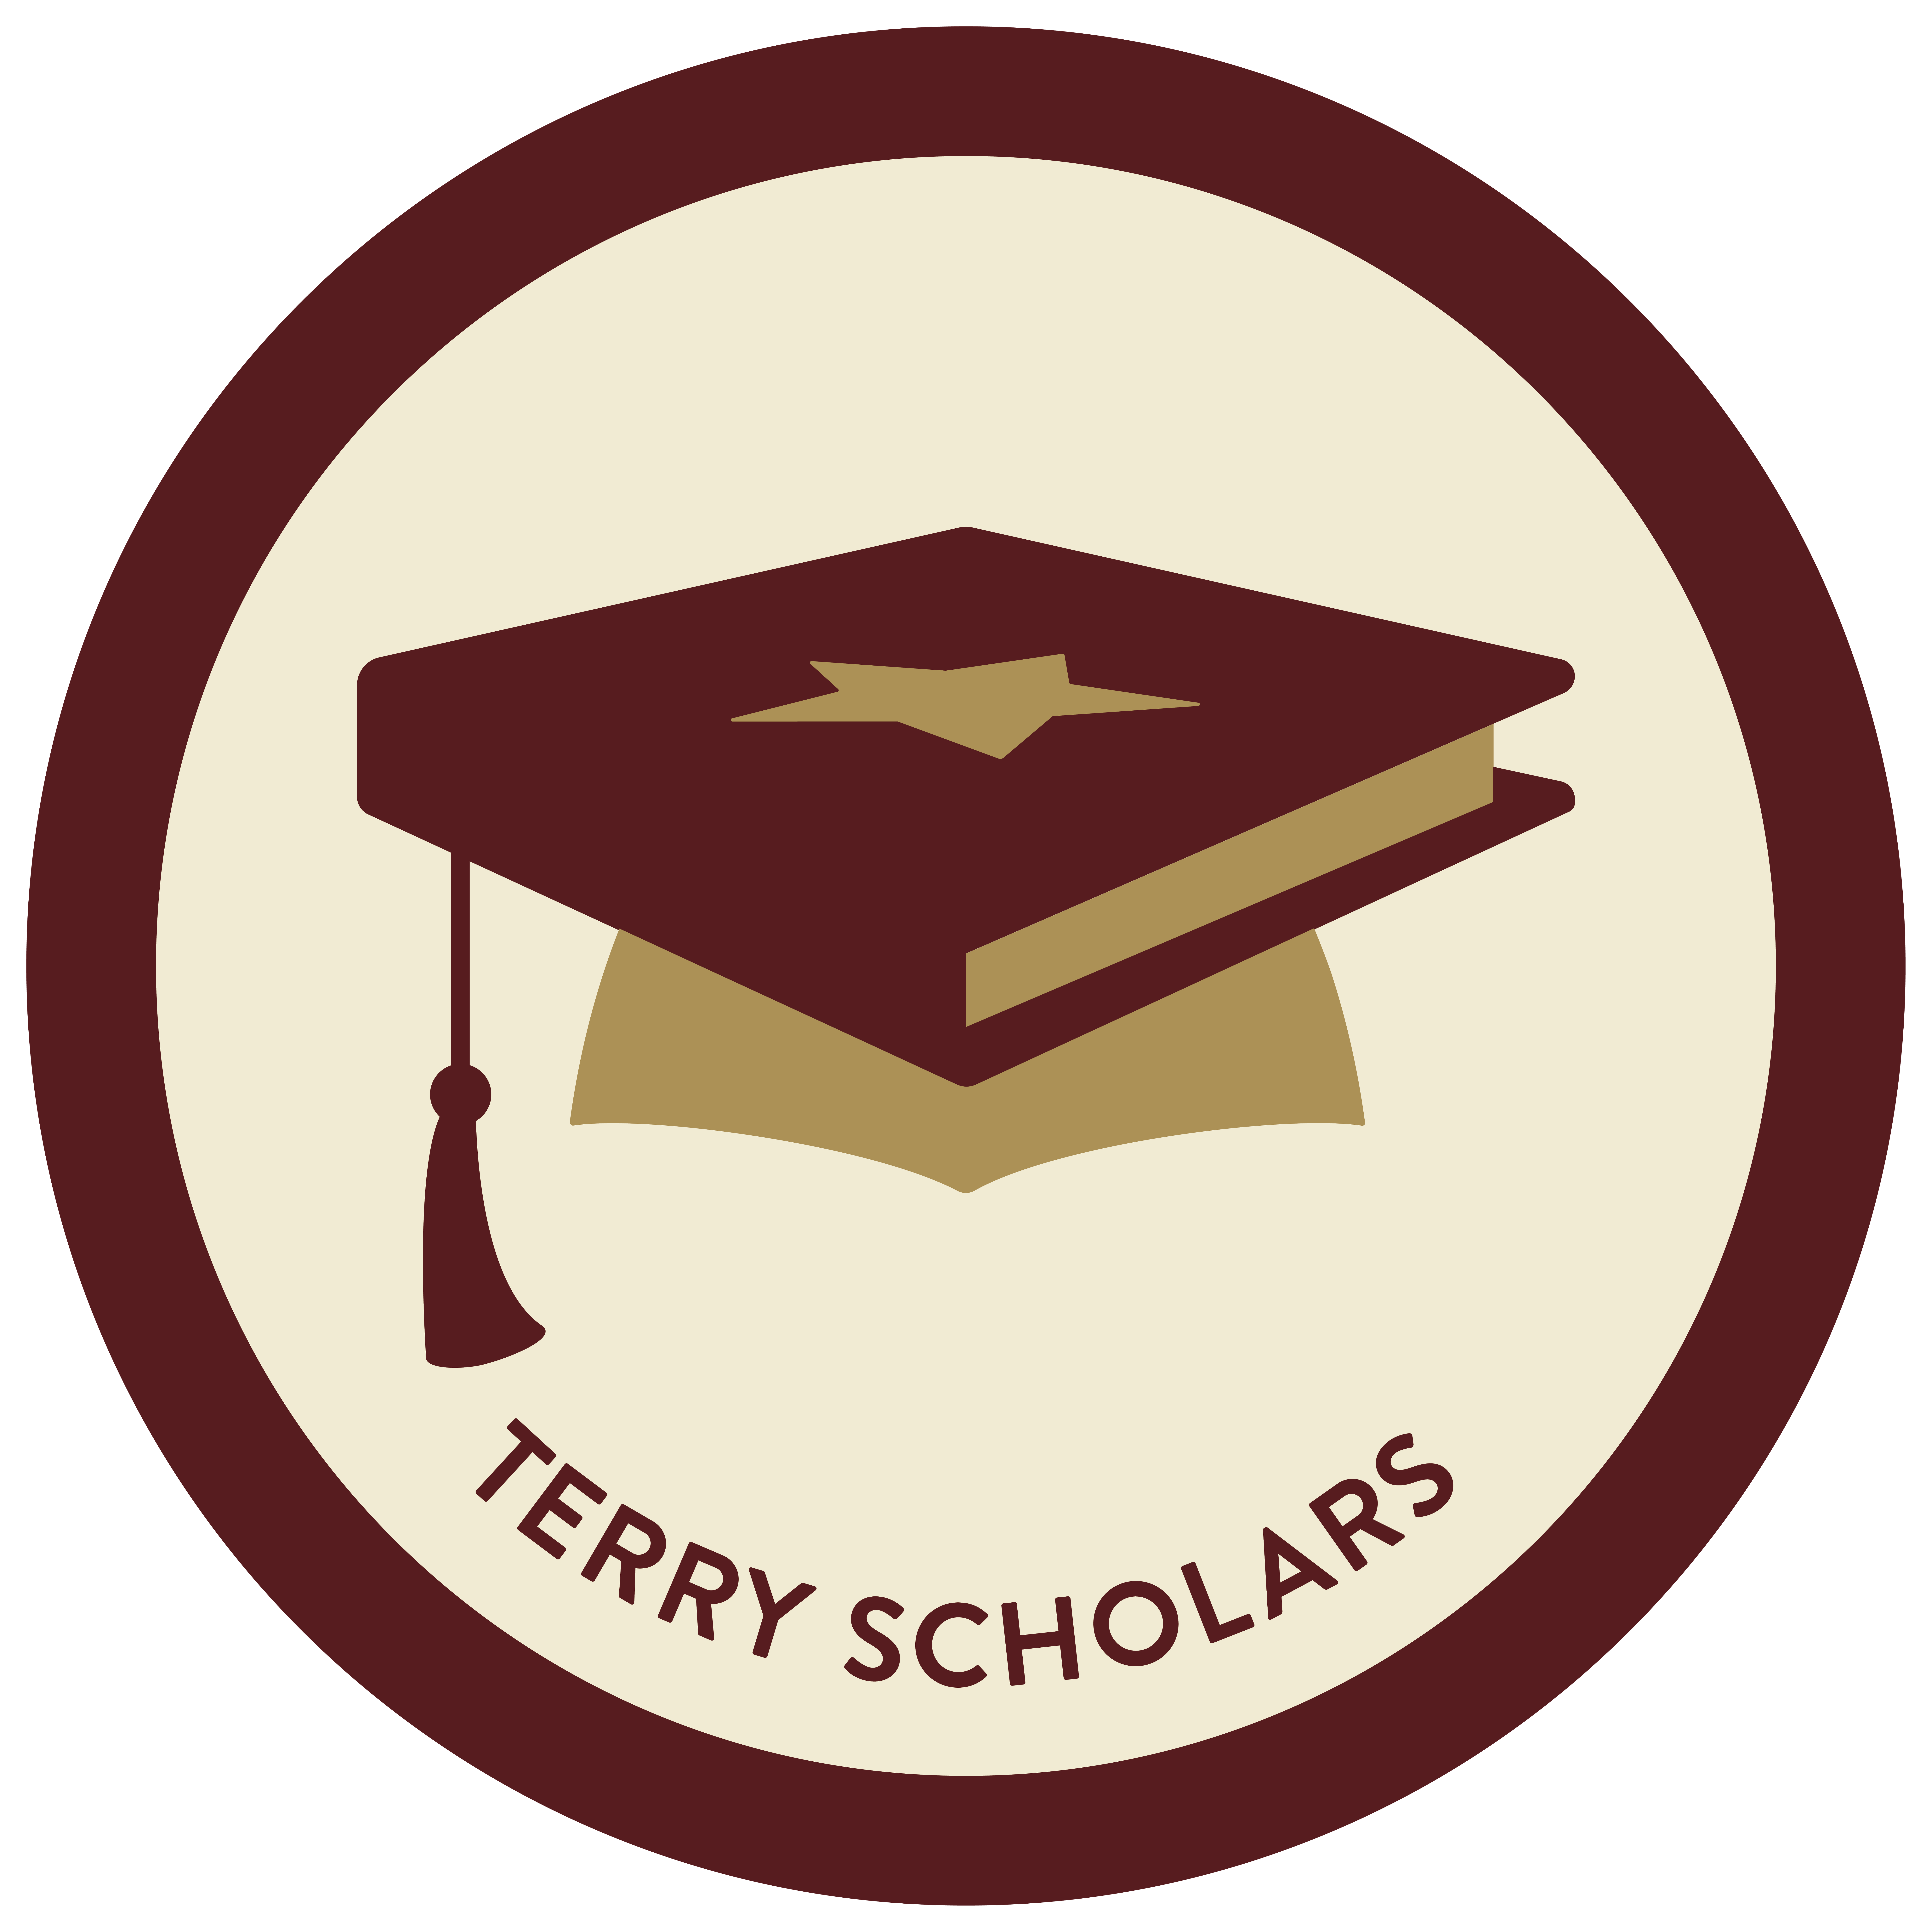 Terry Scholars LLC Logo